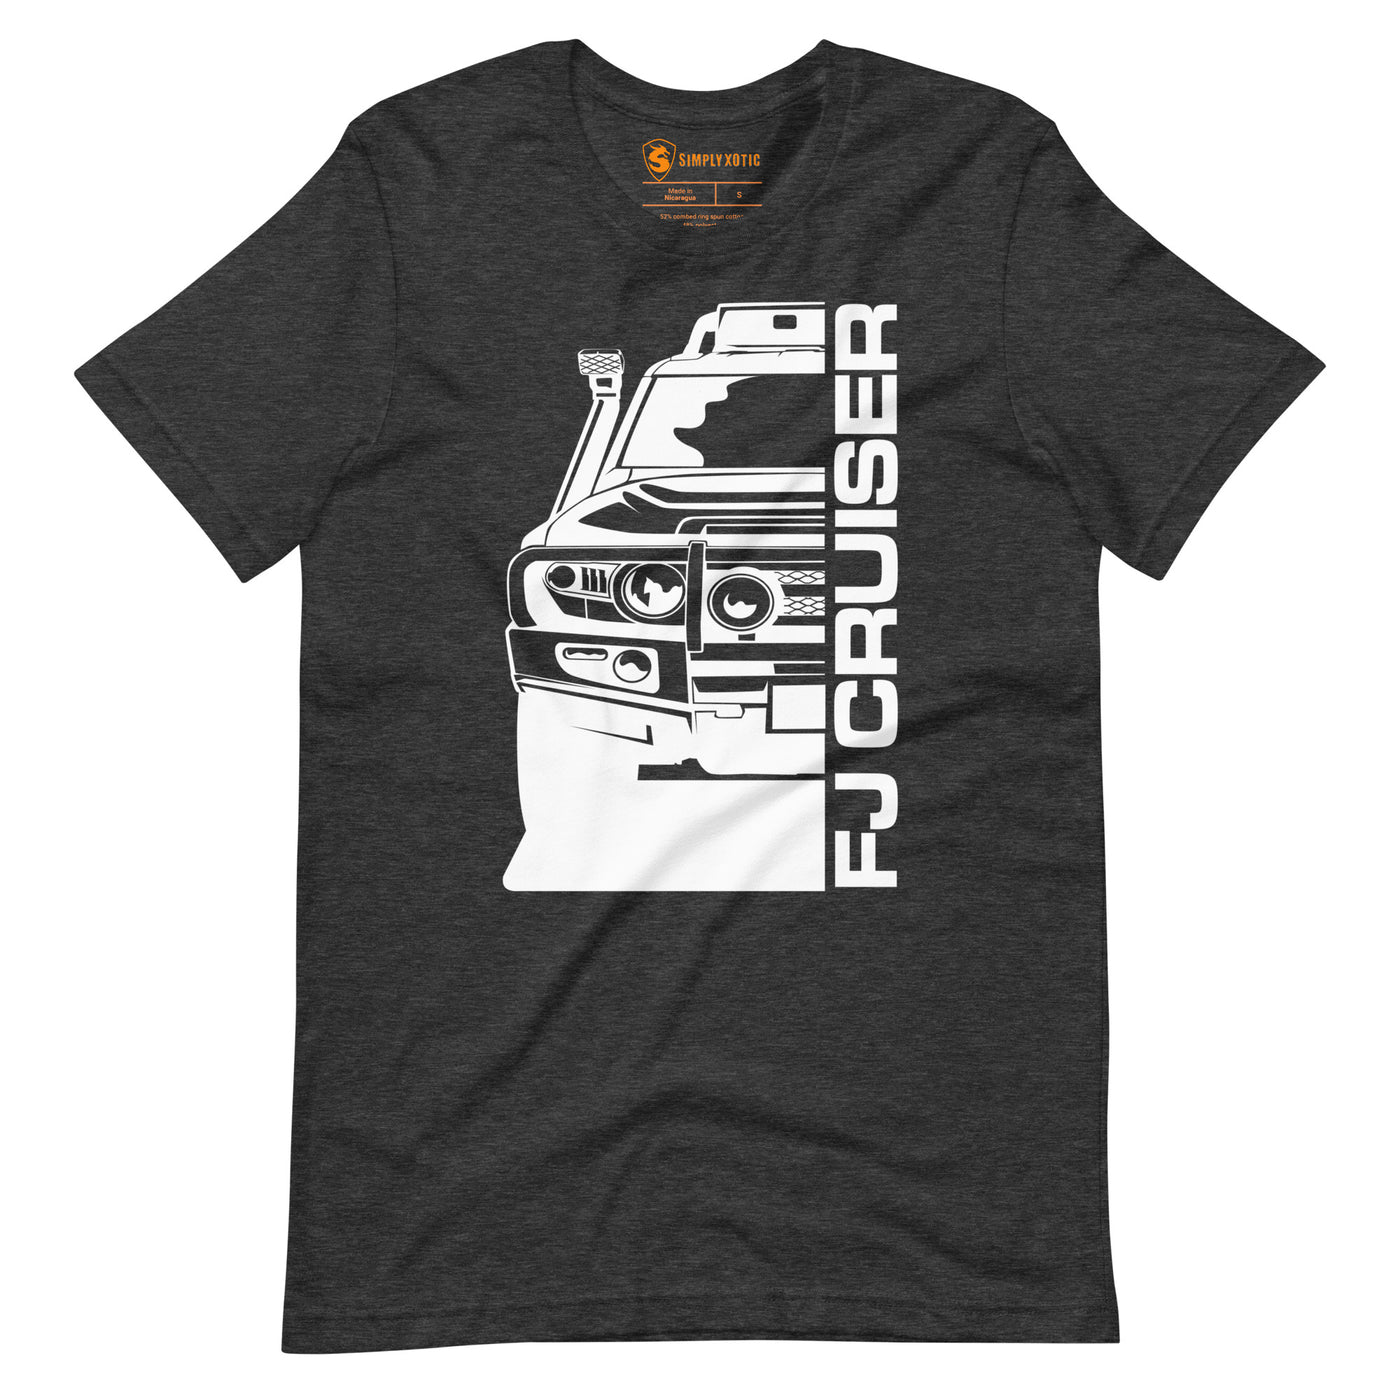 FJ Cruiser T-shirt